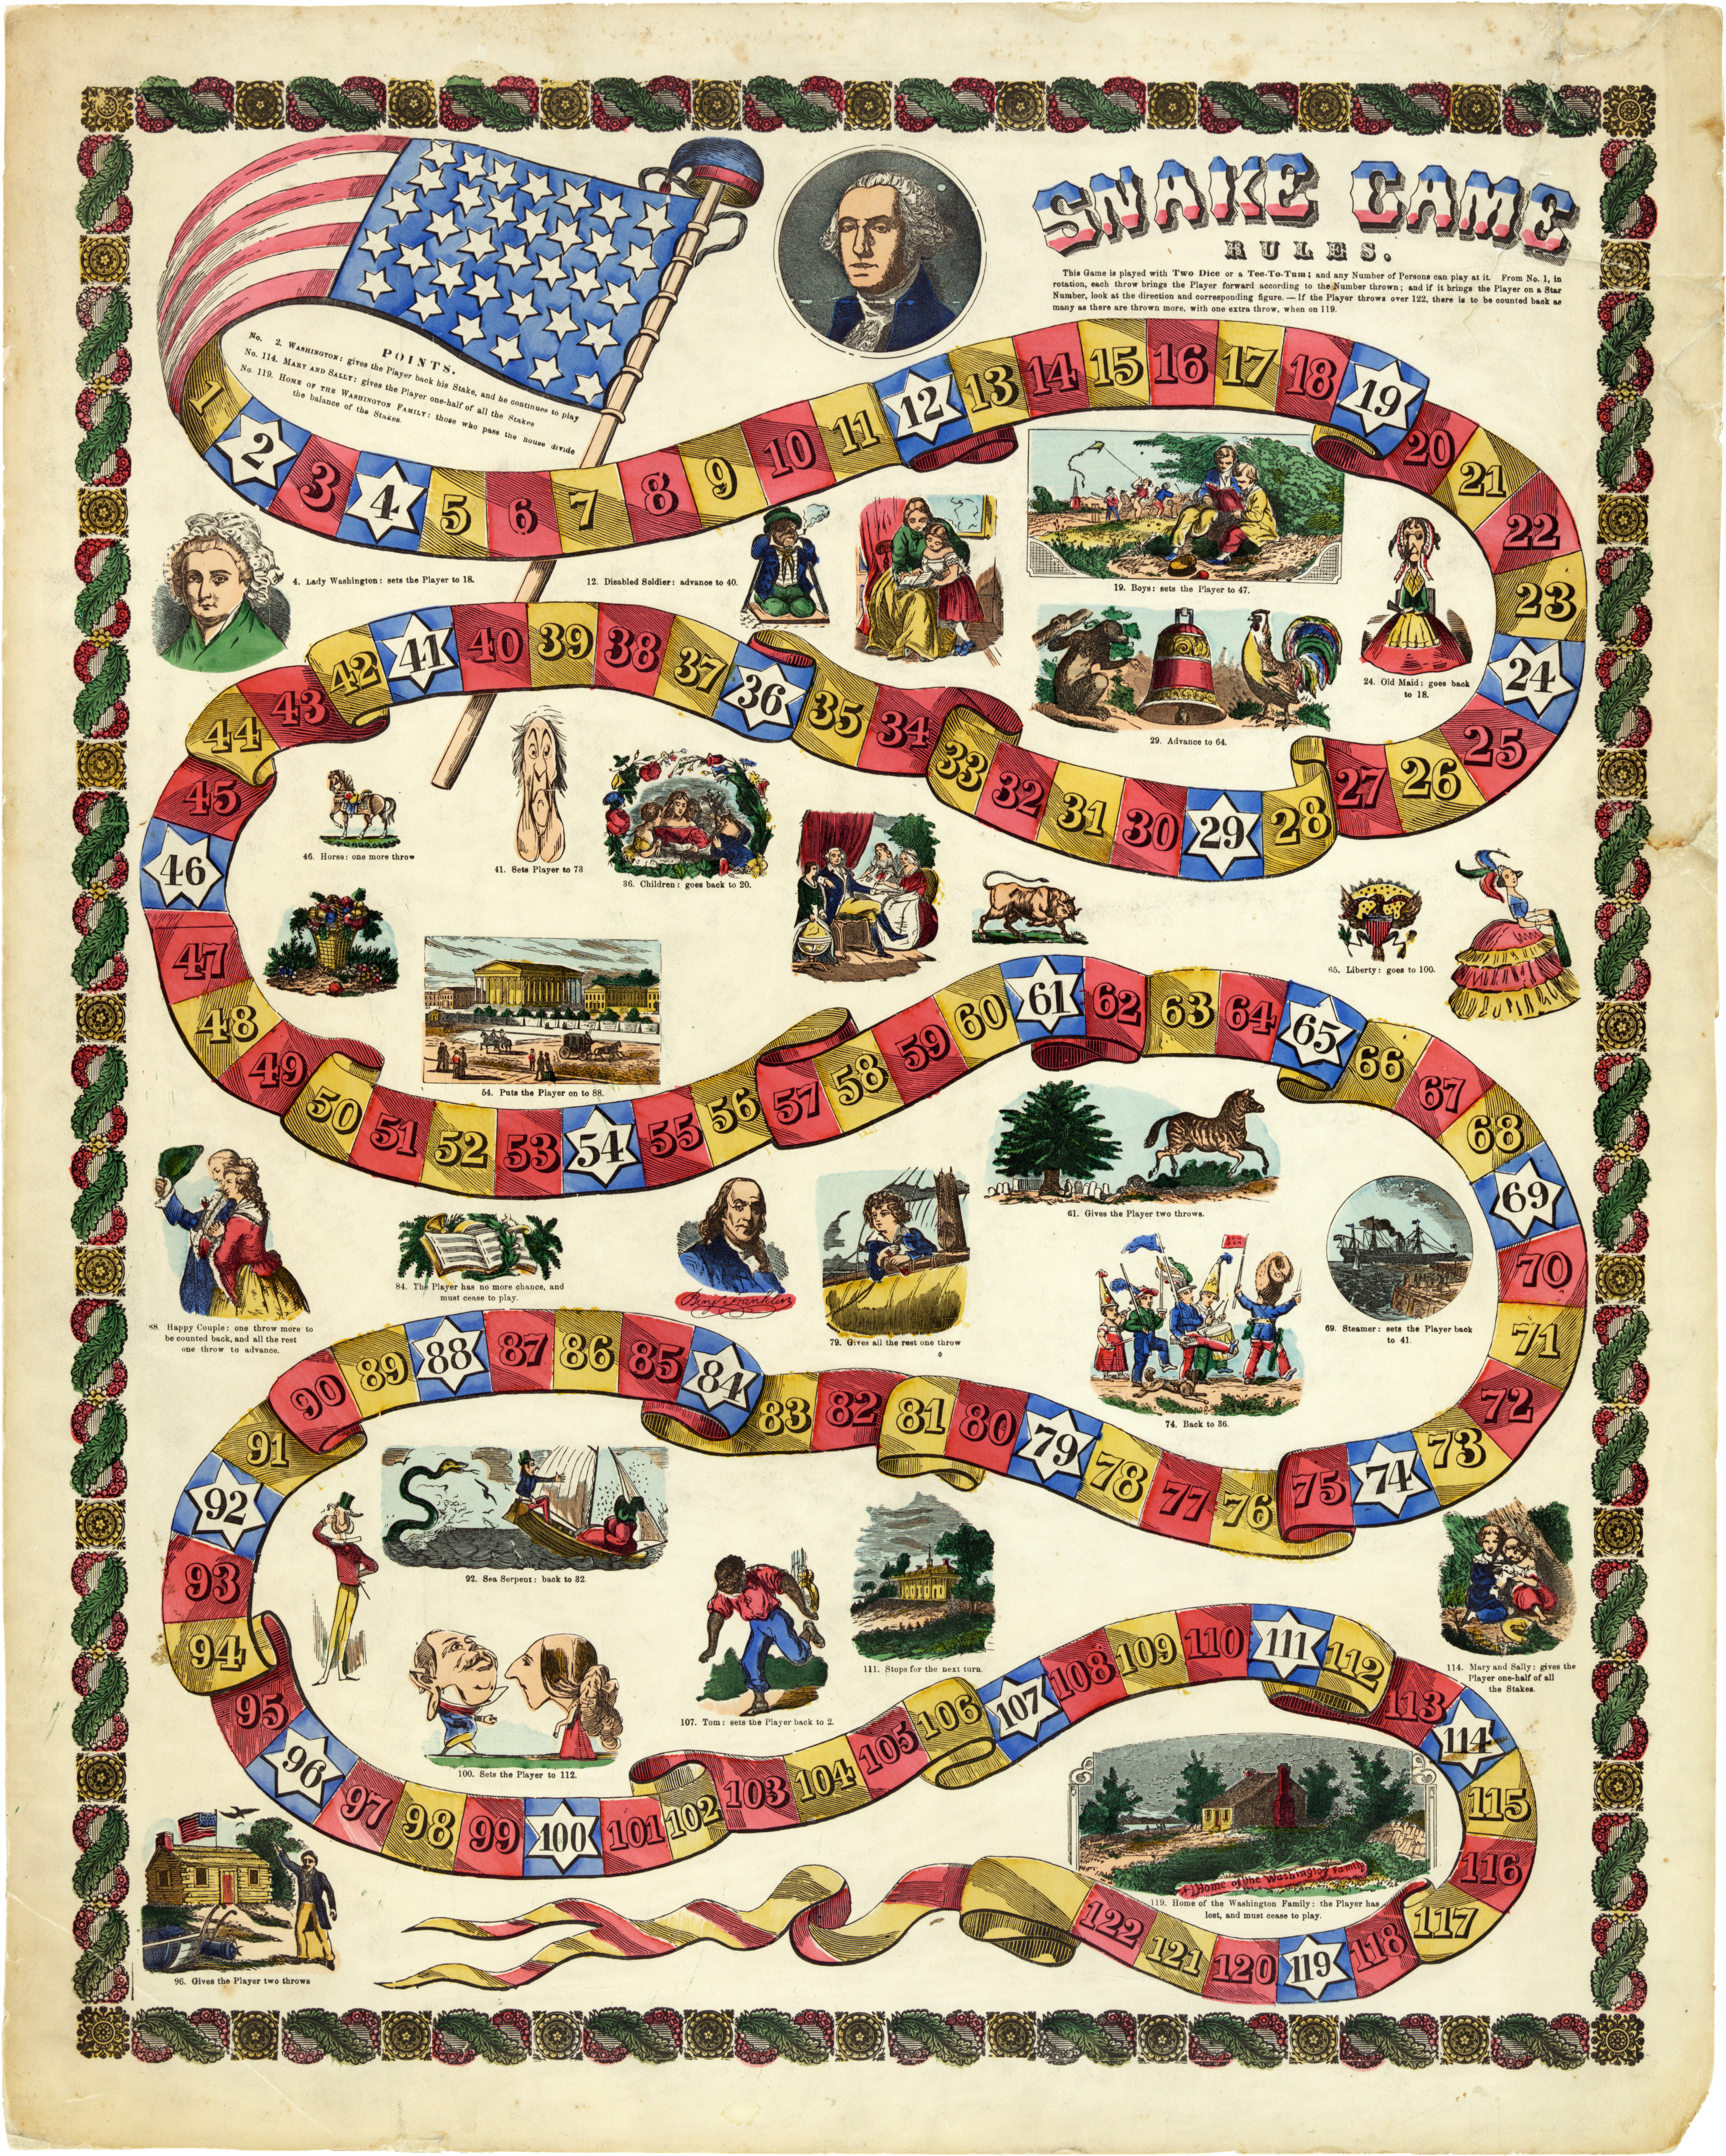 File:George Washington snake game, 1840-60.jpg - Wikimedia Commons